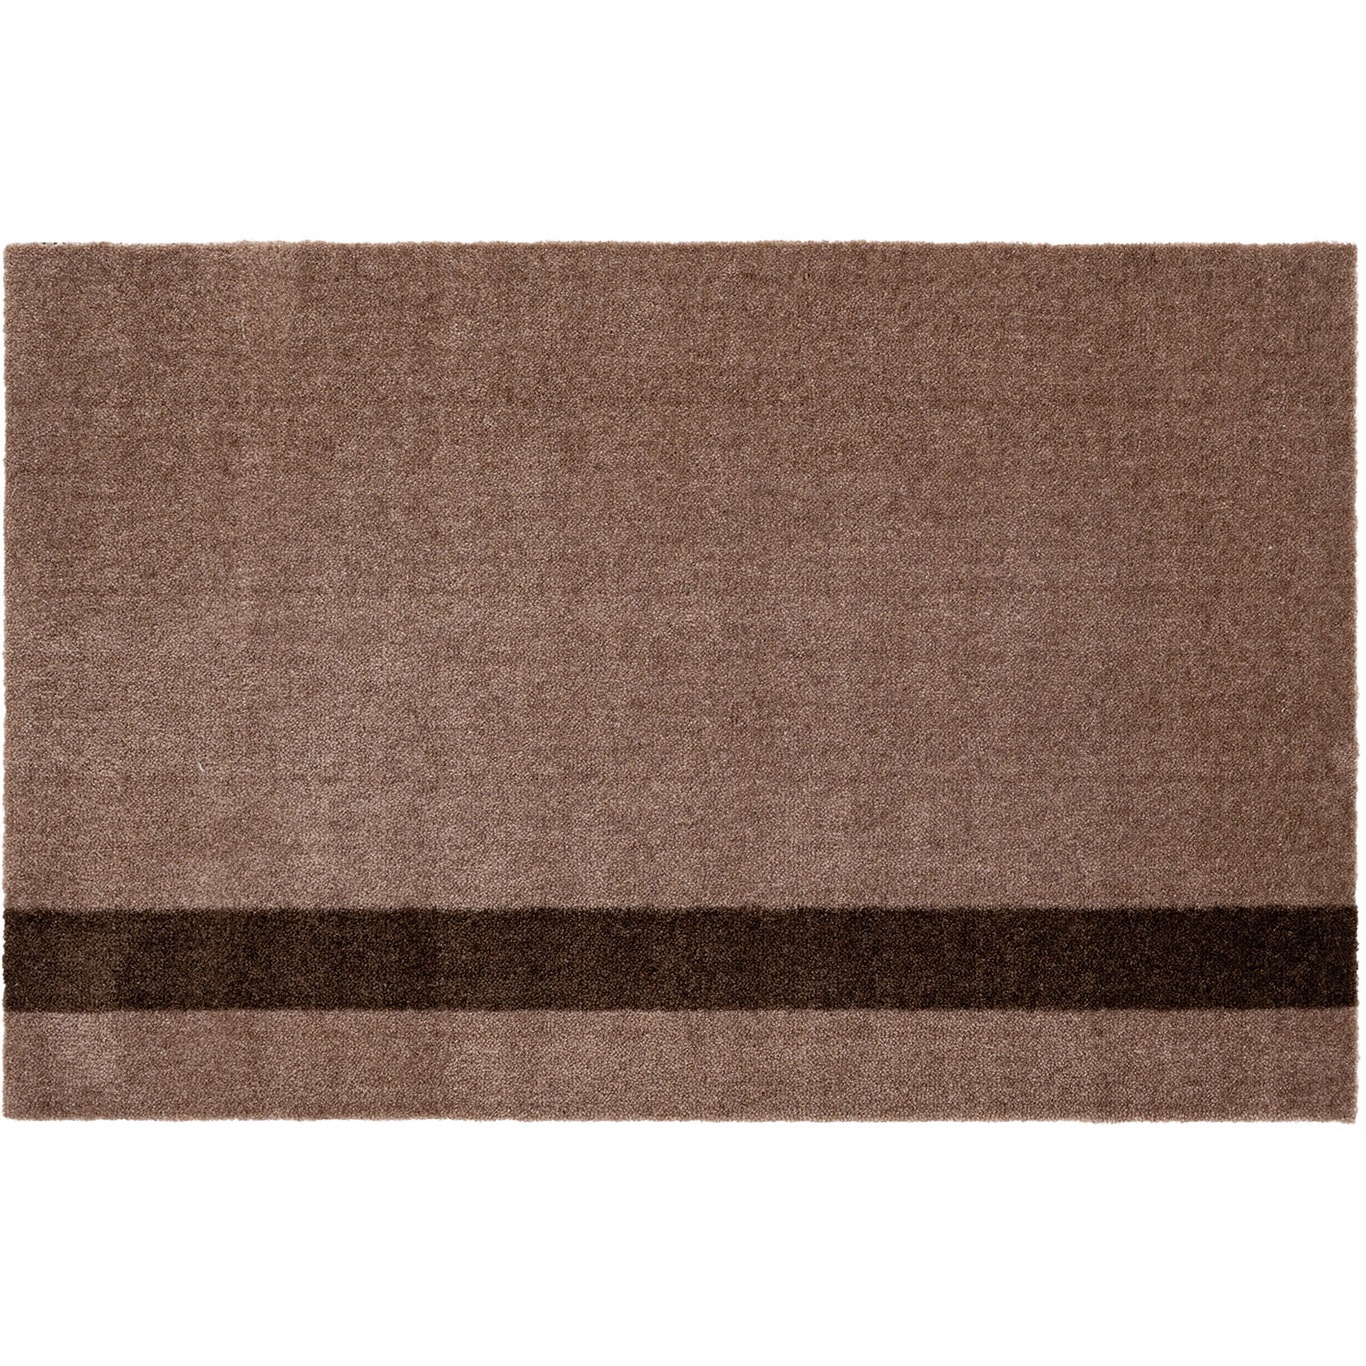 Stripes Matta Vertikal Sand/Brun, 60x90 cm